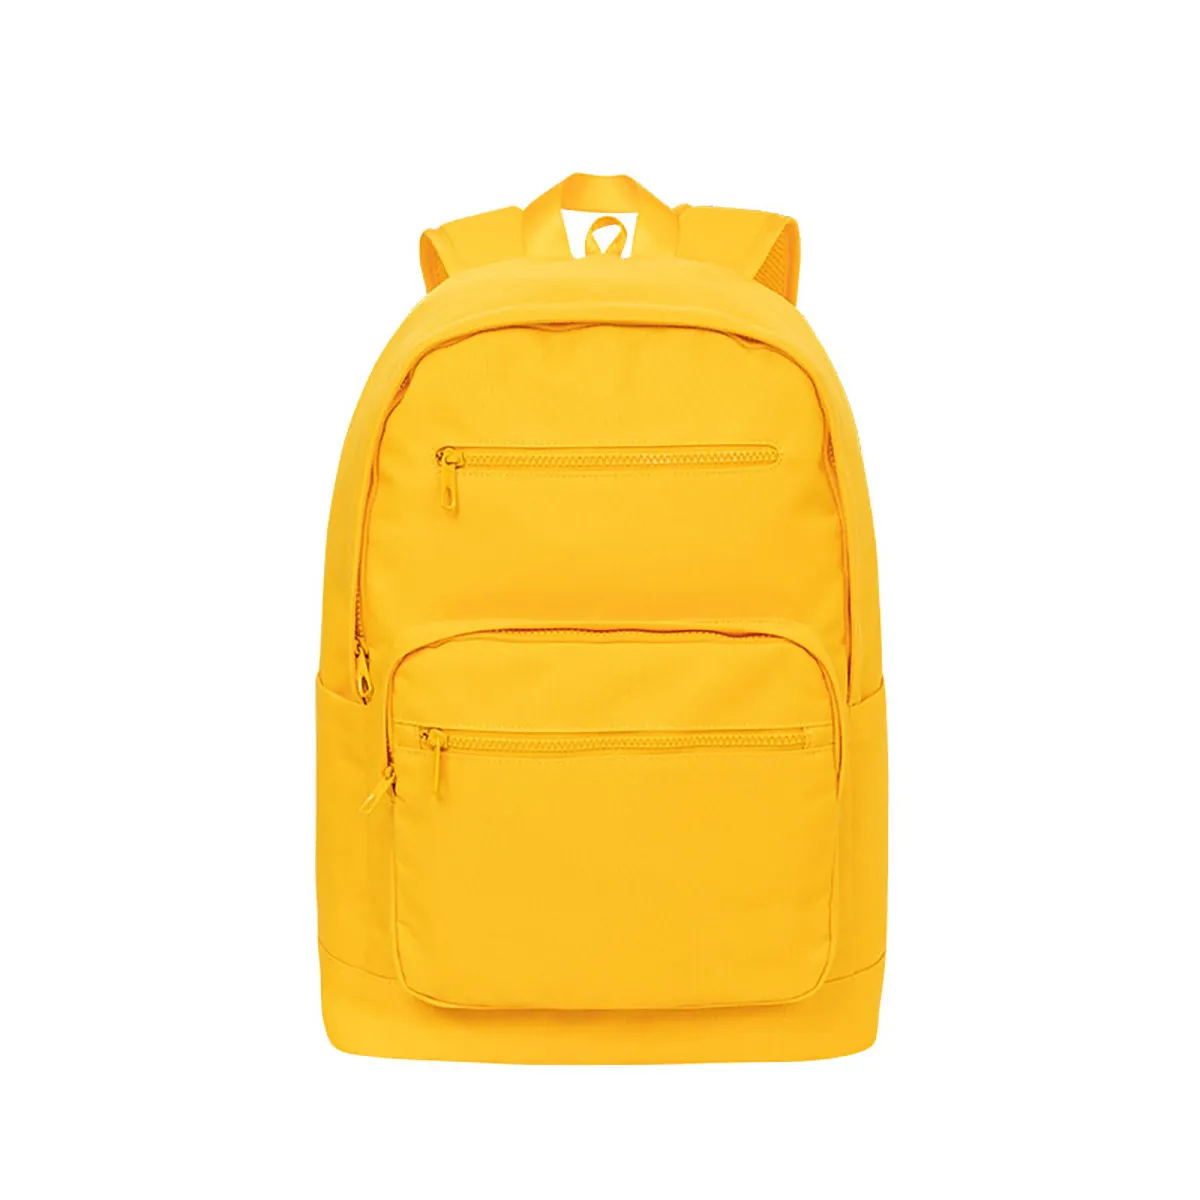 Quanzhou New blank oxford yellow sac a dos zaino teens casual daily work pack big college school bag per adulti